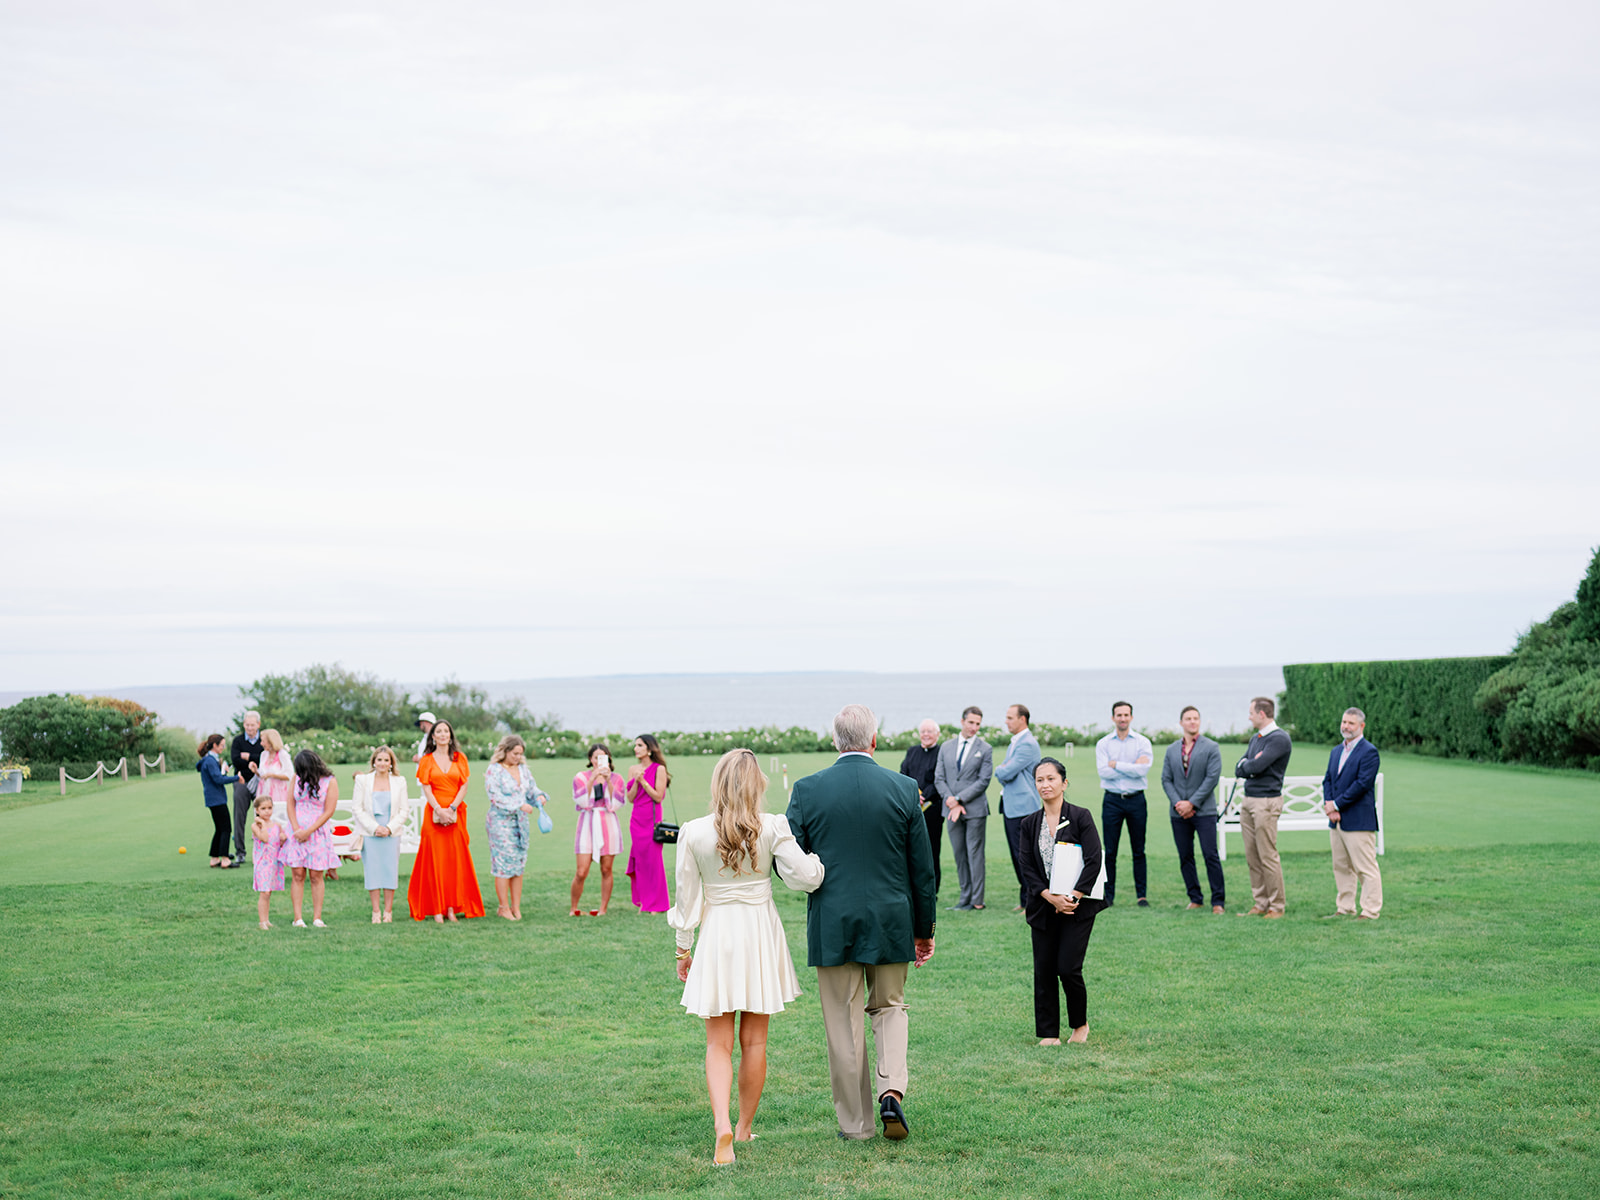 A seaside wedding ceremony rehearsal at Ocean House in Rhode Island.